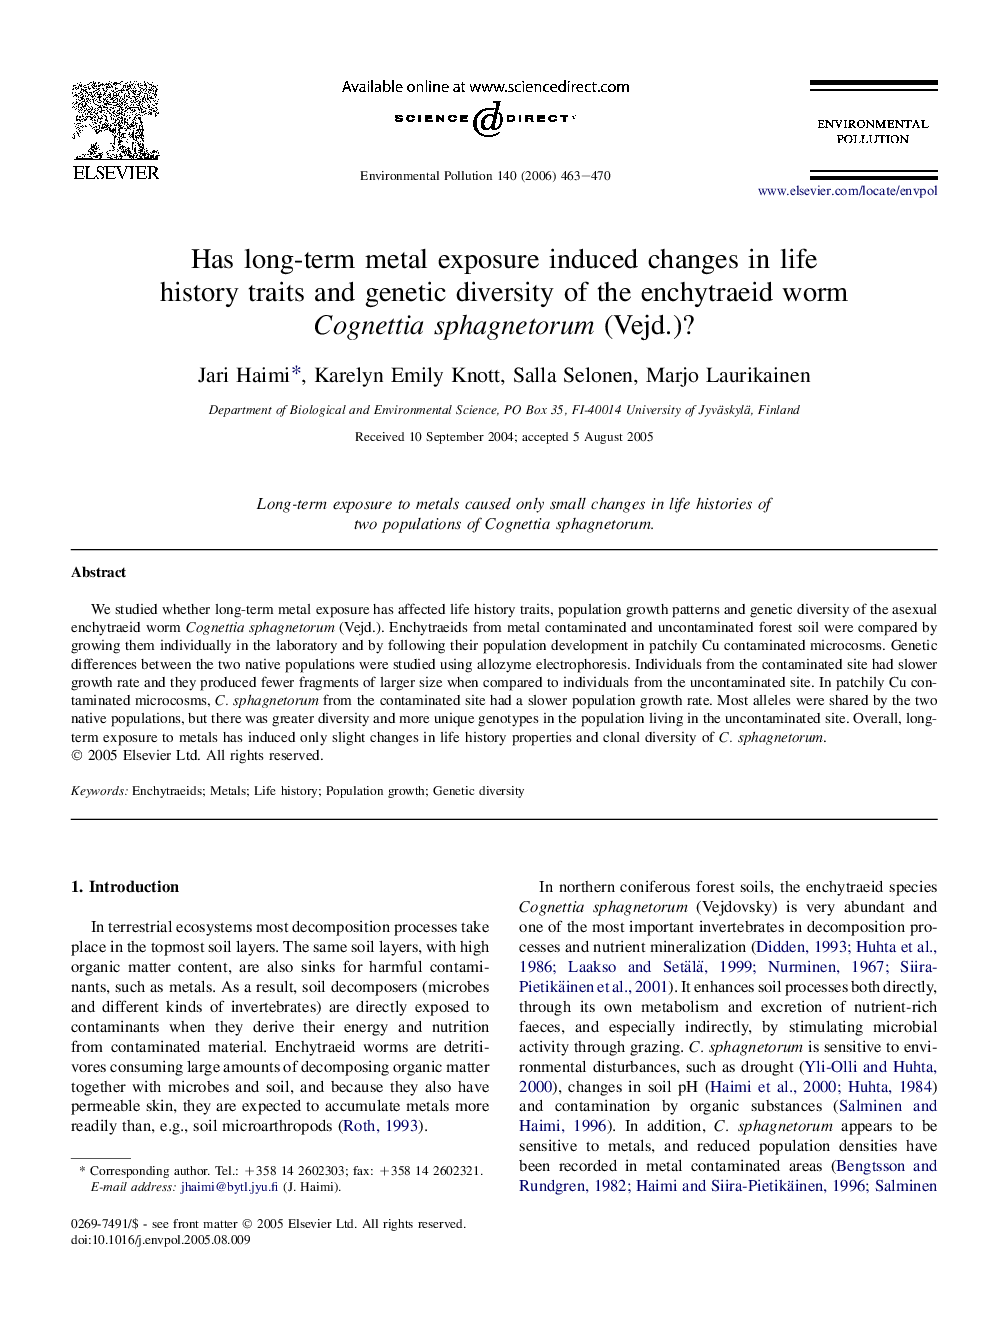 Has long-term metal exposure induced changes in life history traits and genetic diversity of the enchytraeid worm Cognettia sphagnetorum (Vejd.)?